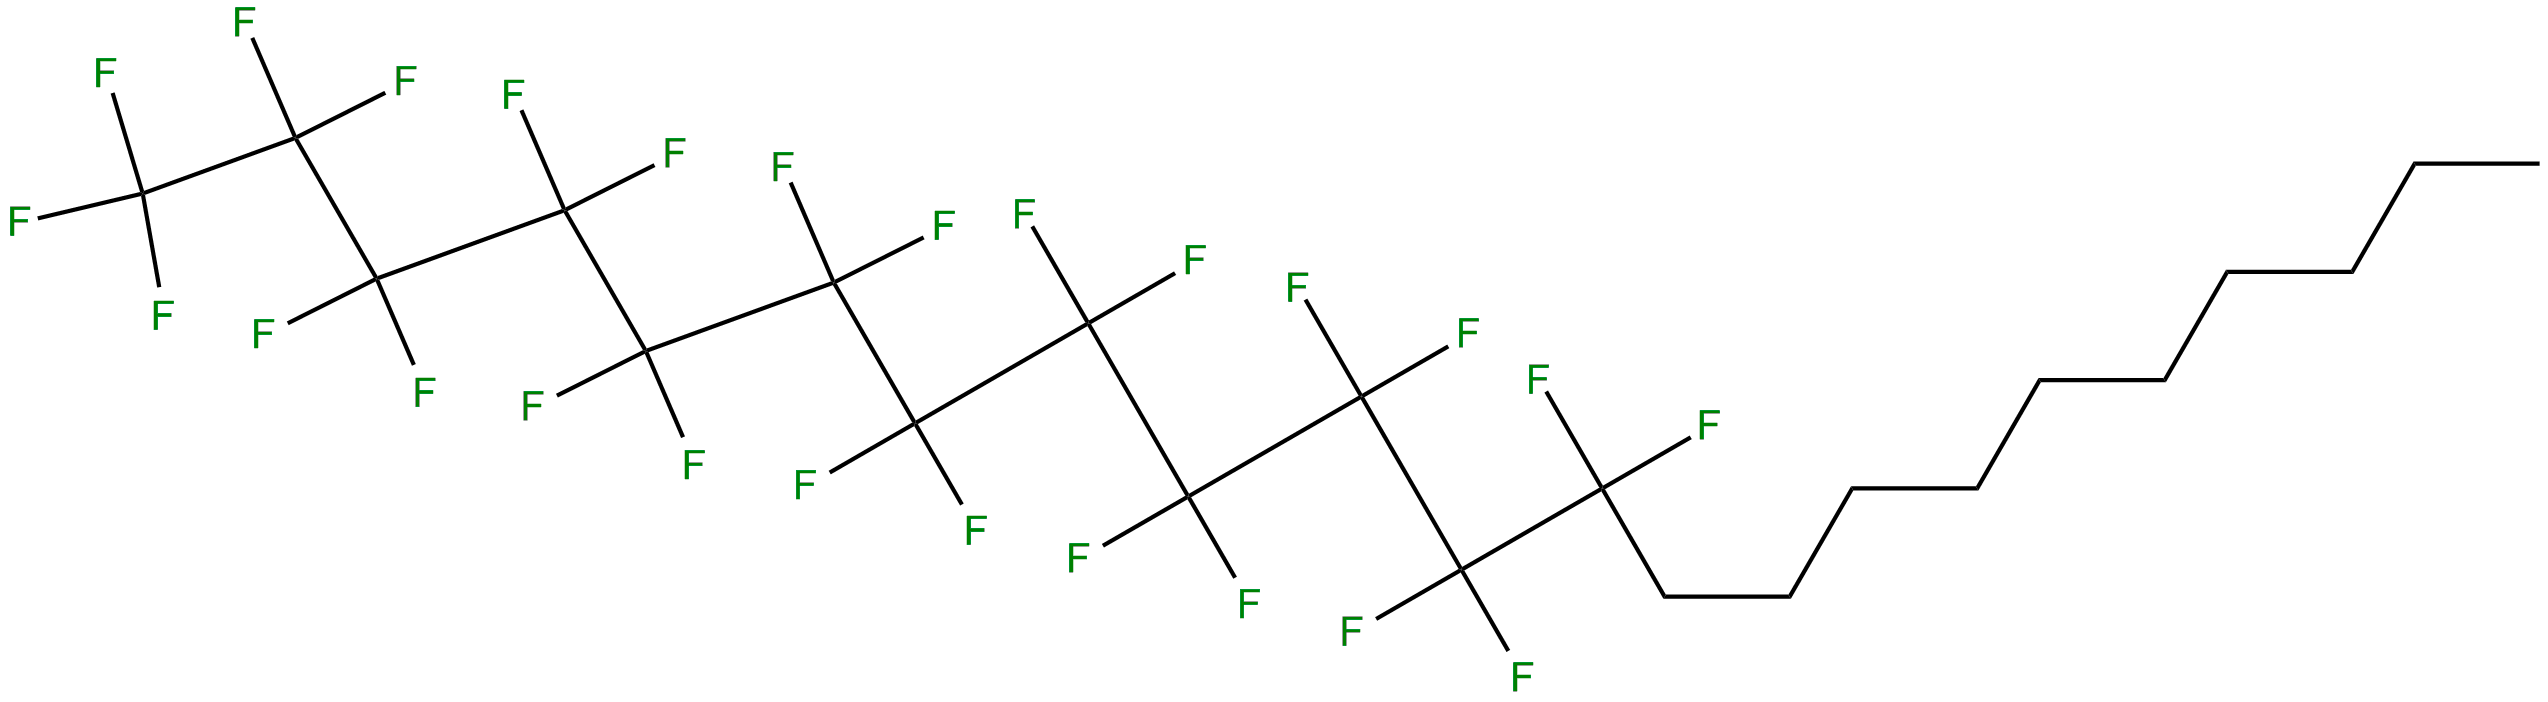 Image of 1,1,1,2,2,3,3,4,4,5,5,6,6,7,7,8,8,9,9,10,10,11,11,12,12-pentacosafluorodocosane